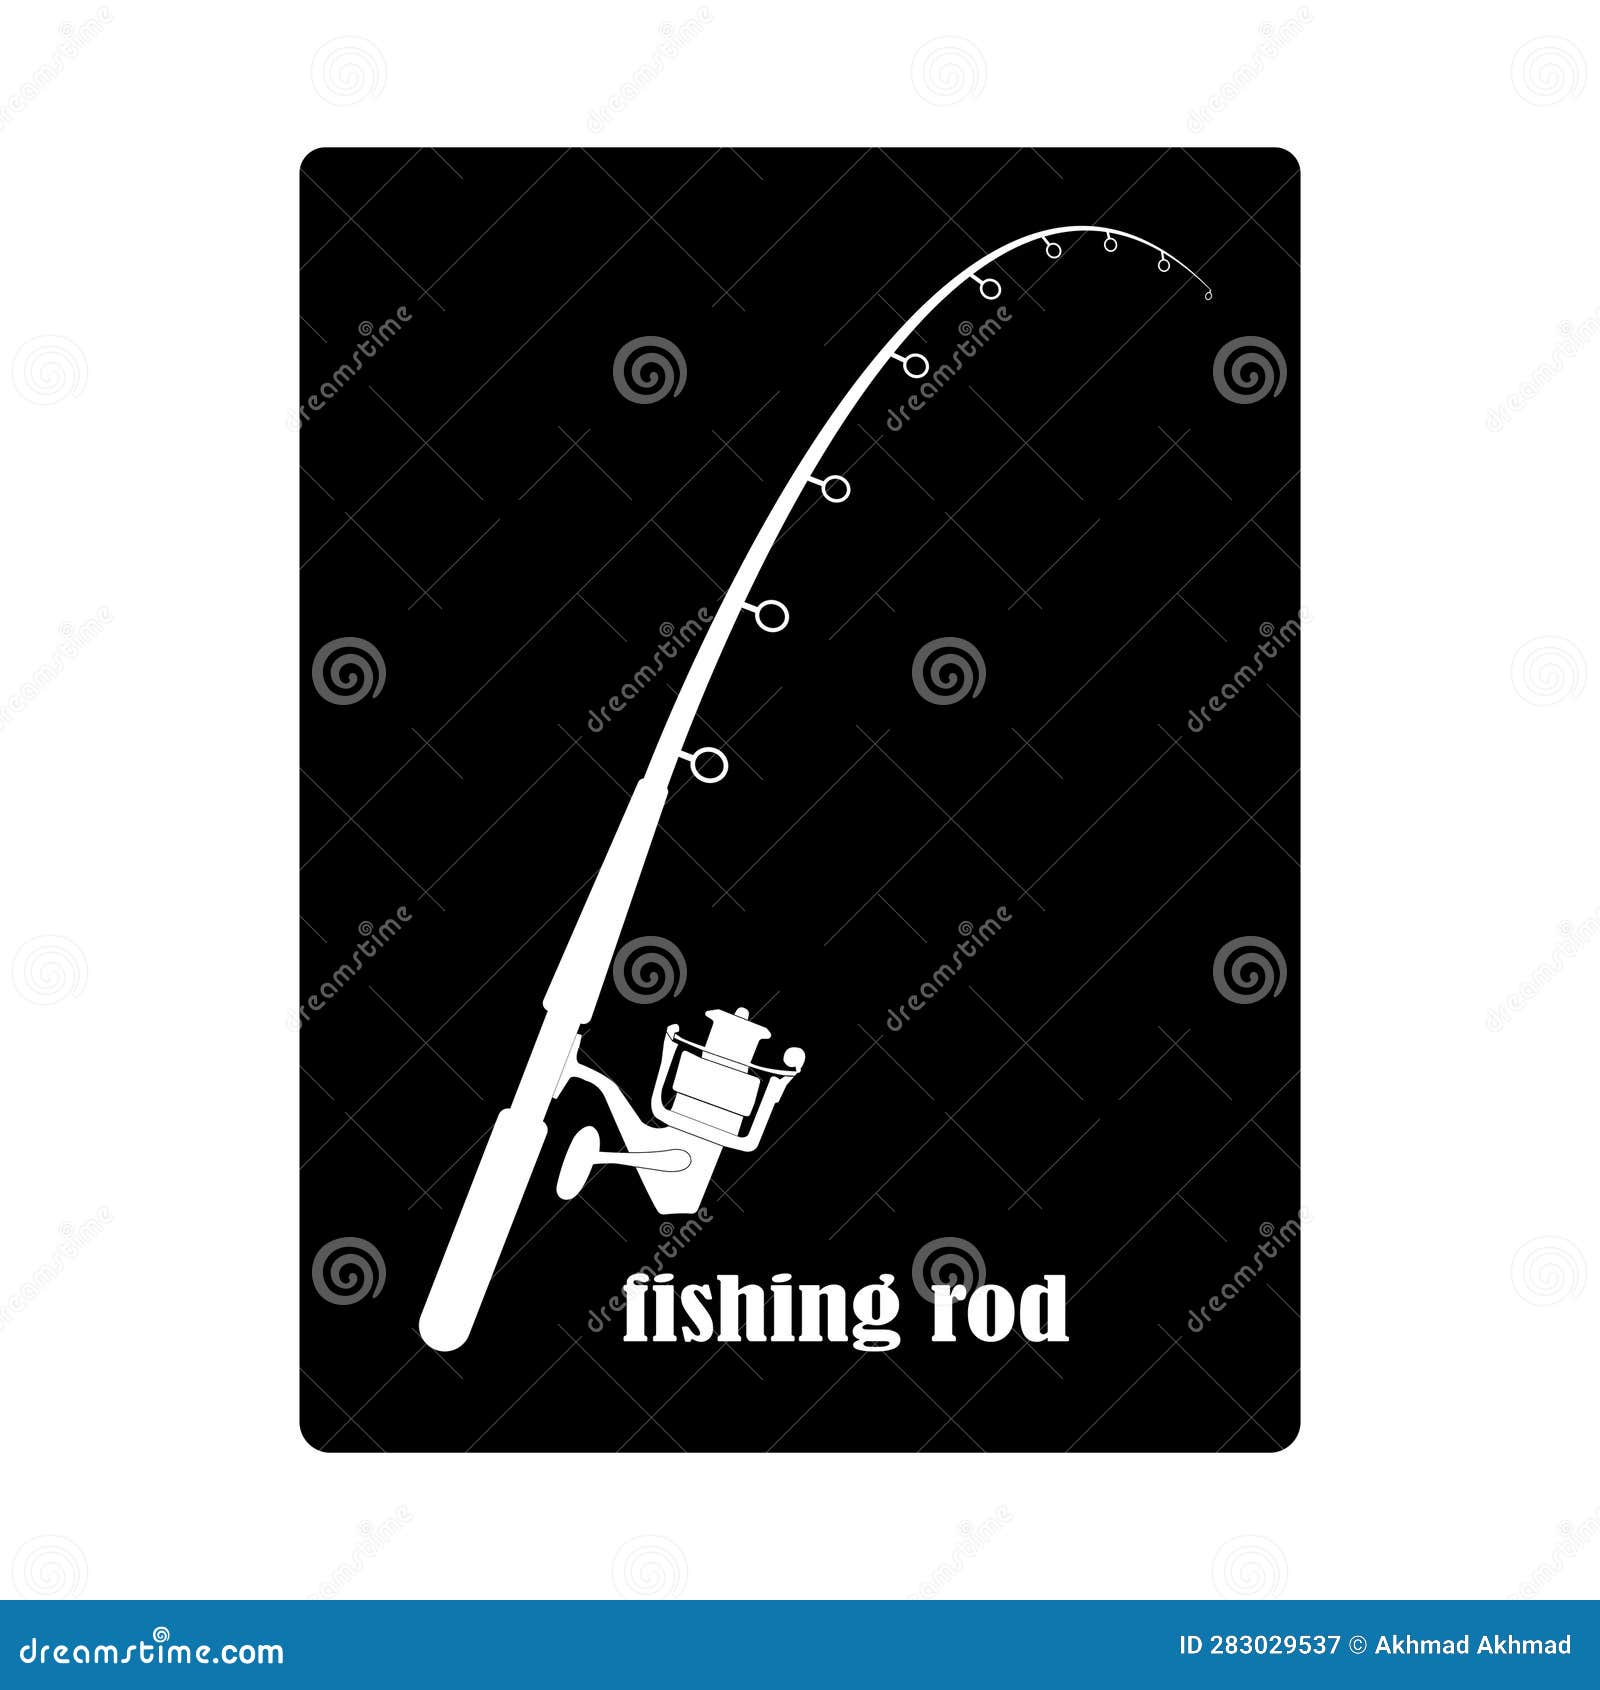 Fishing rod icon stock vector. Illustration of metallic - 283029537